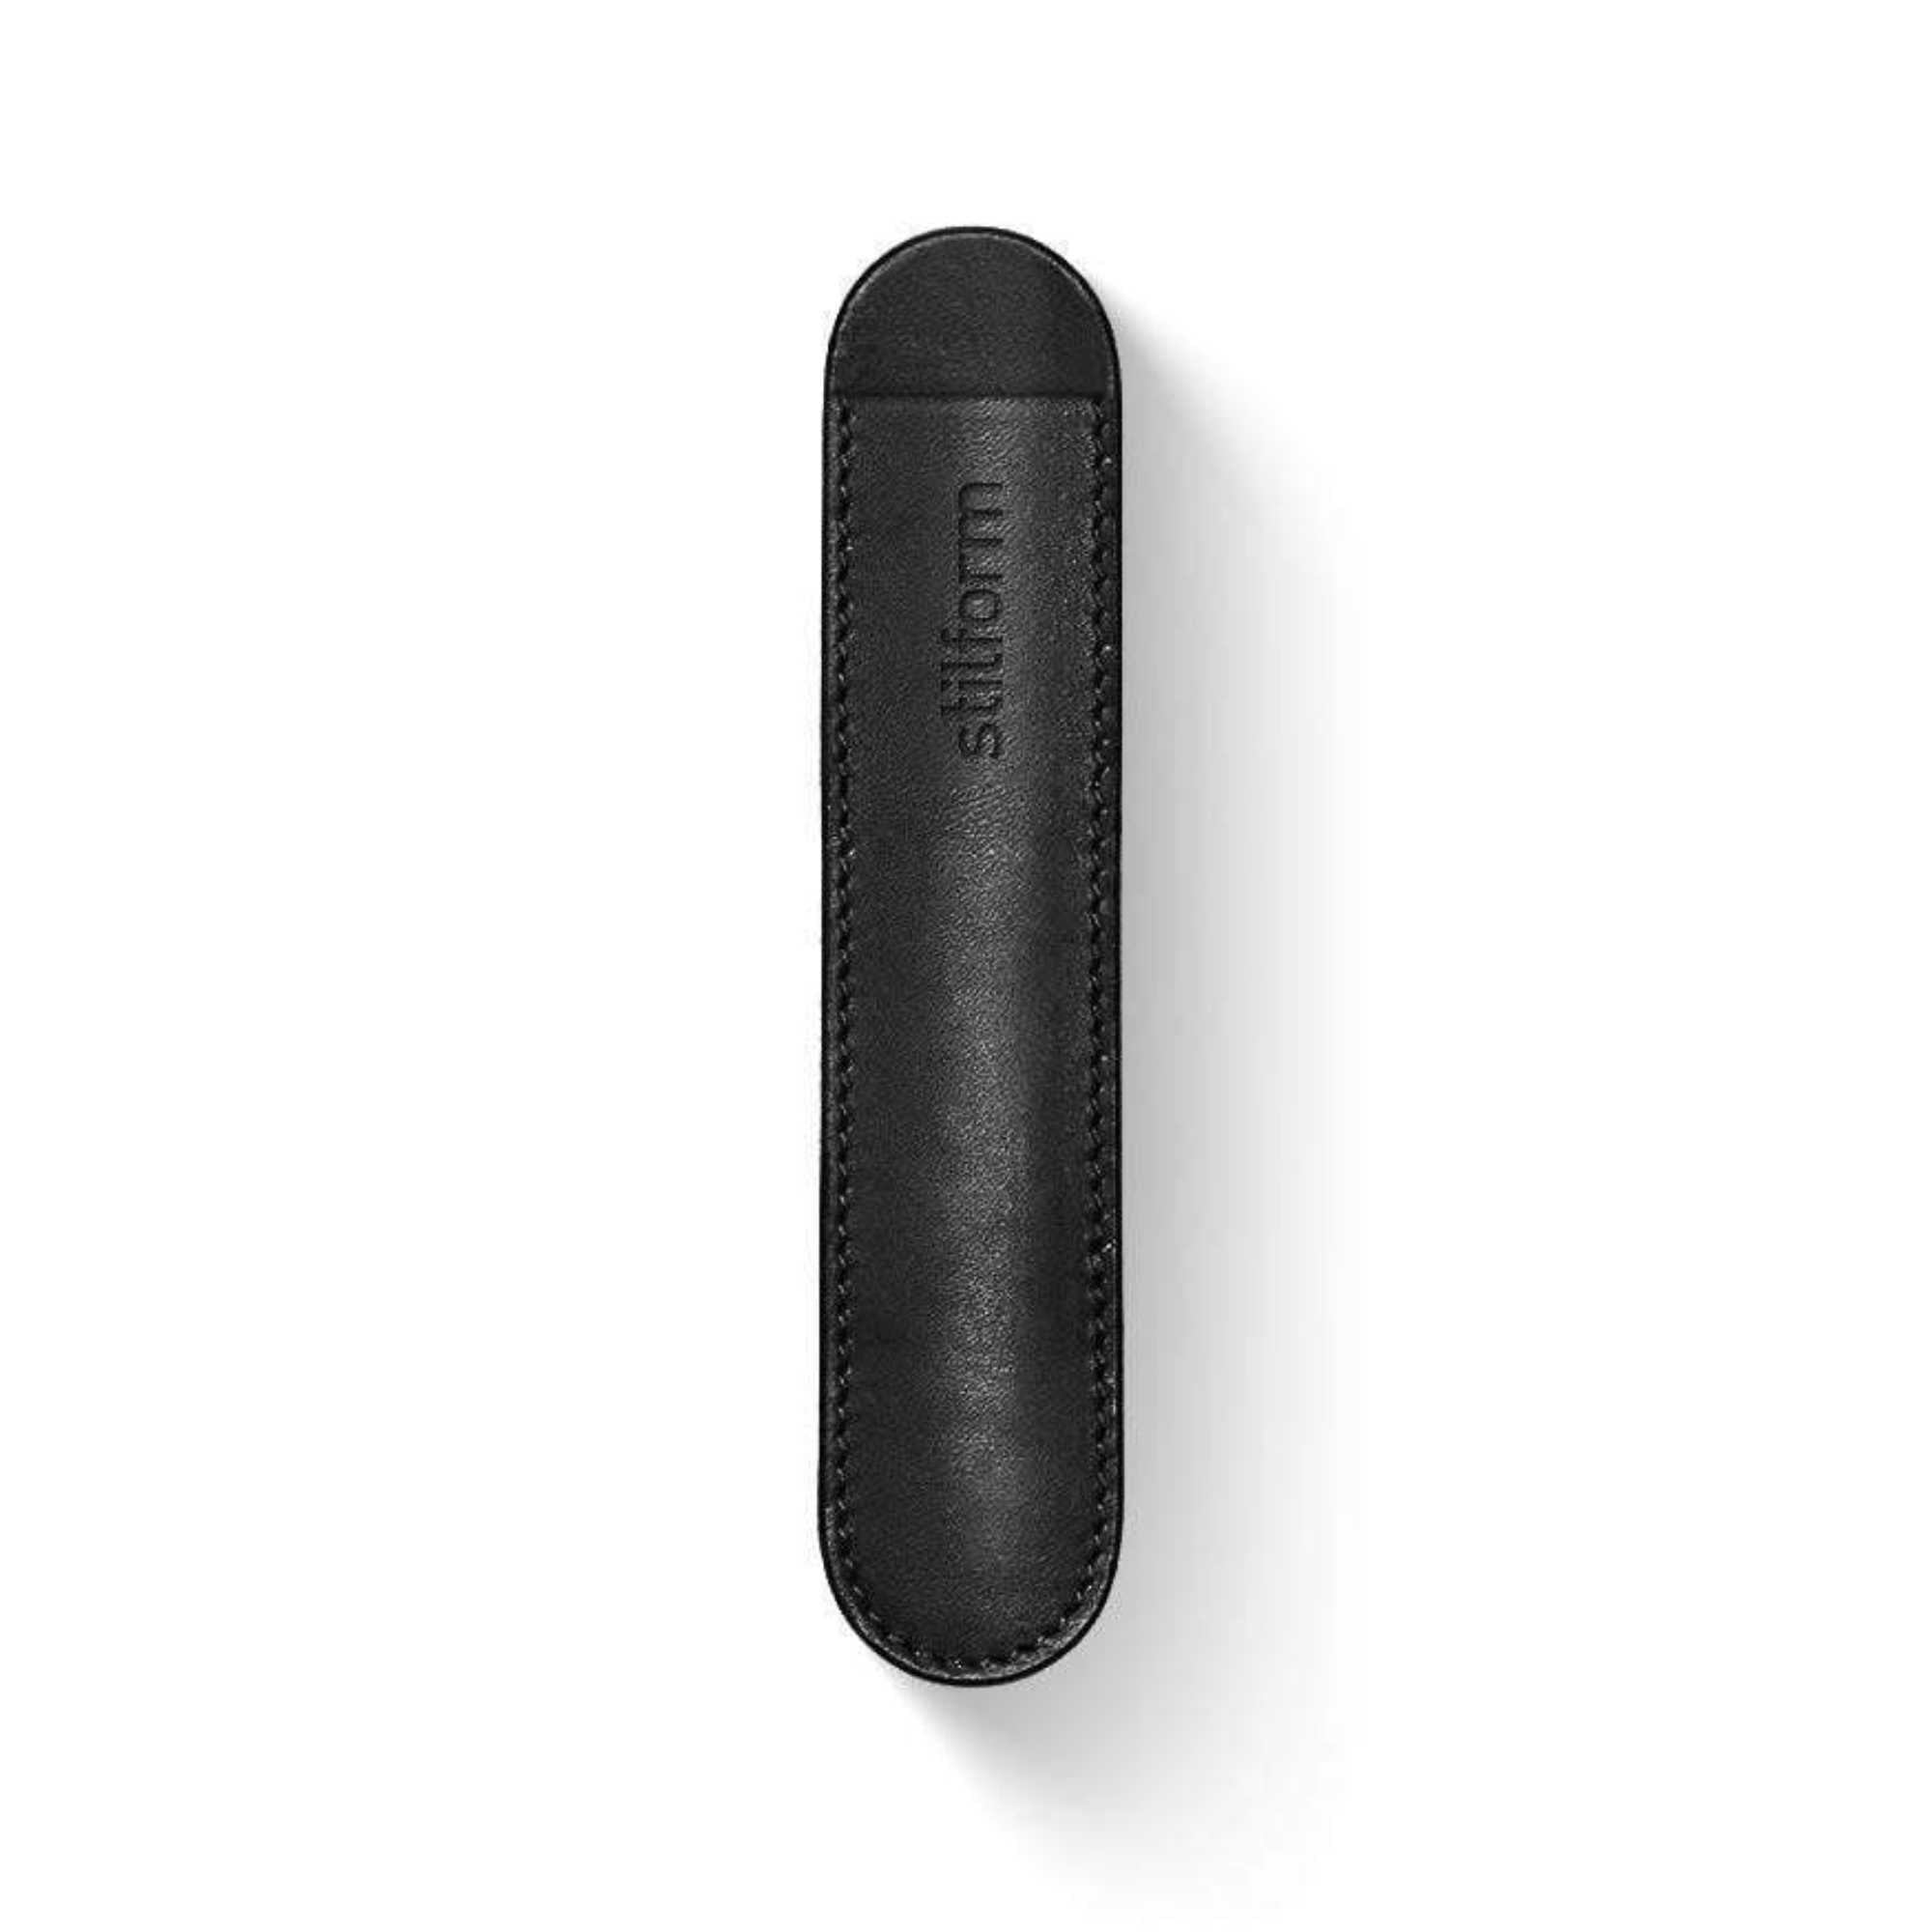 Stilform leather pouch, black